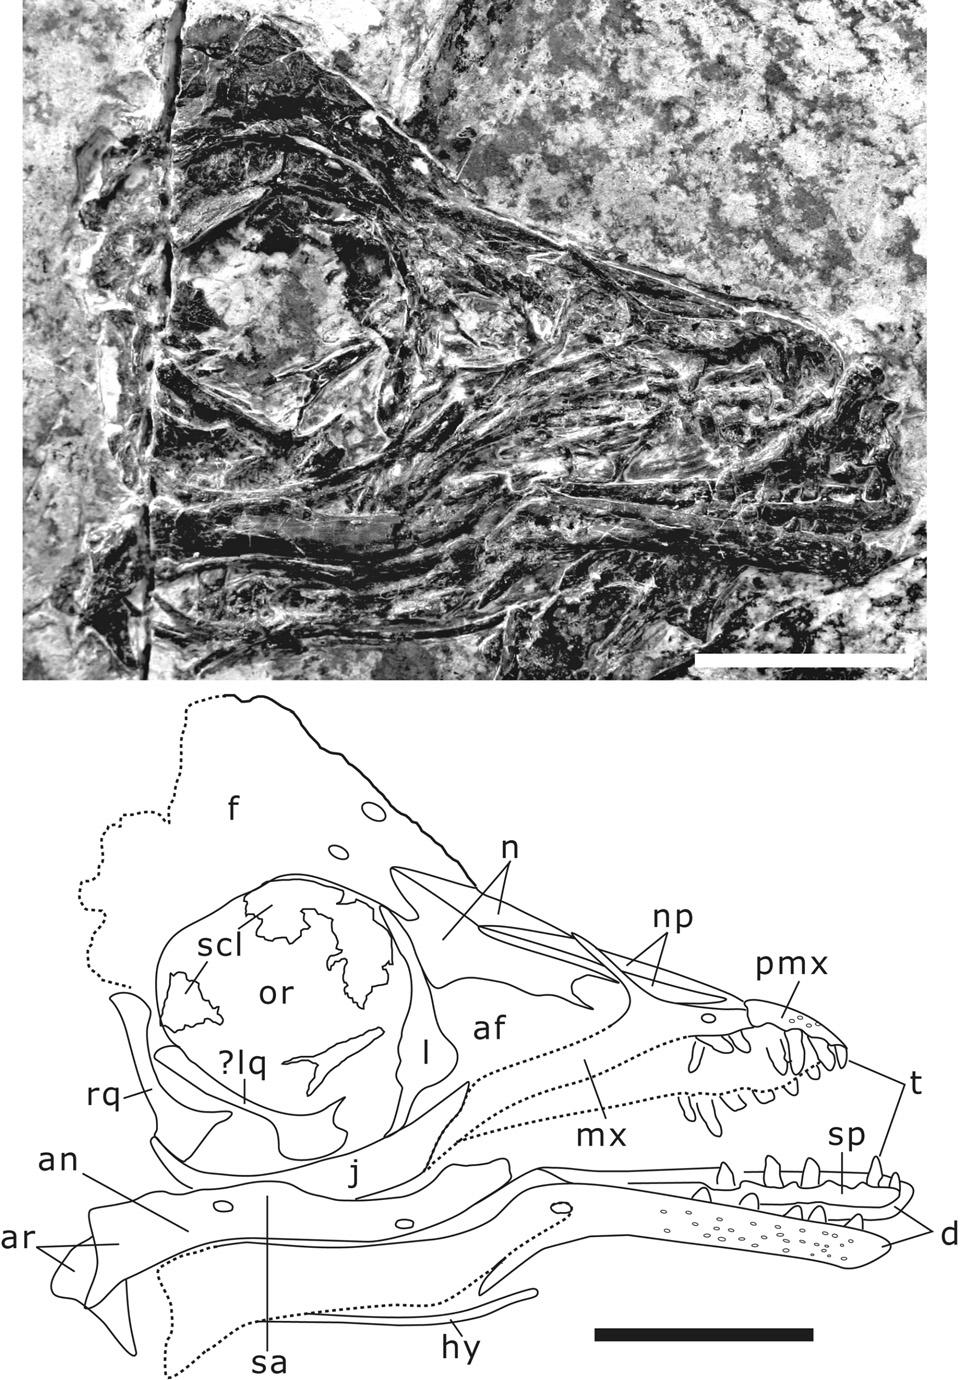 156 JOURNAL OF VERTEBRATE PALEONTOLOGY, VOL. 31, NO. 1, 2011 TABLE 1. B00167). Measurements (mm) of Bohaiornis guoi holotype (LPM Skull length 38.